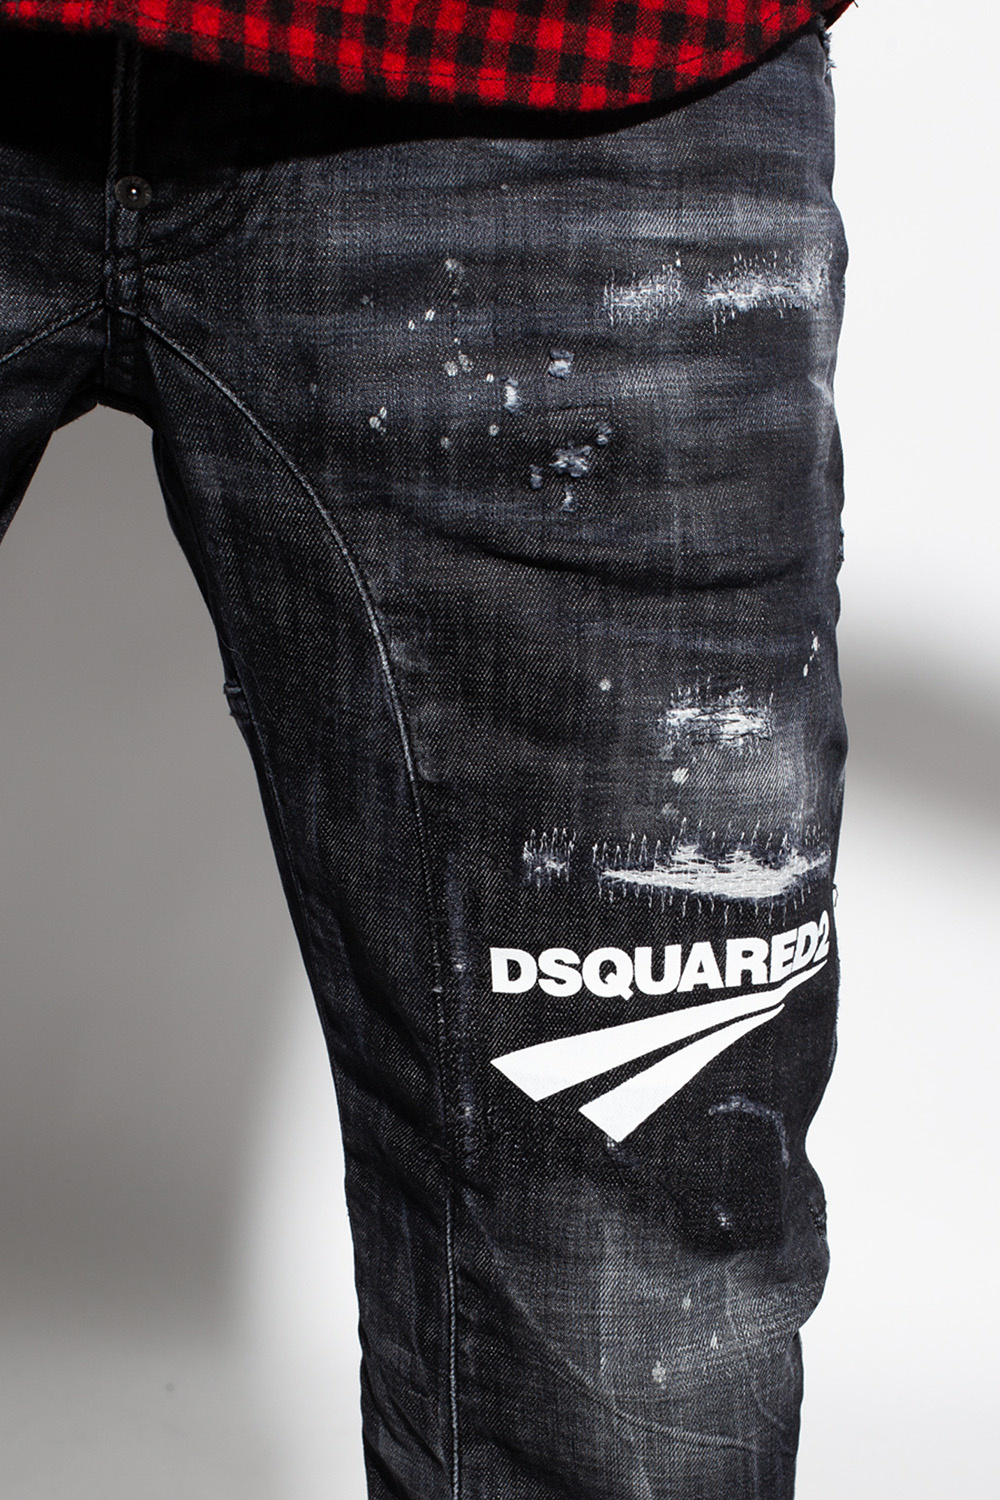 Dsquared2 'Tidy Biker' jeans | Men's Clothing | Vitkac